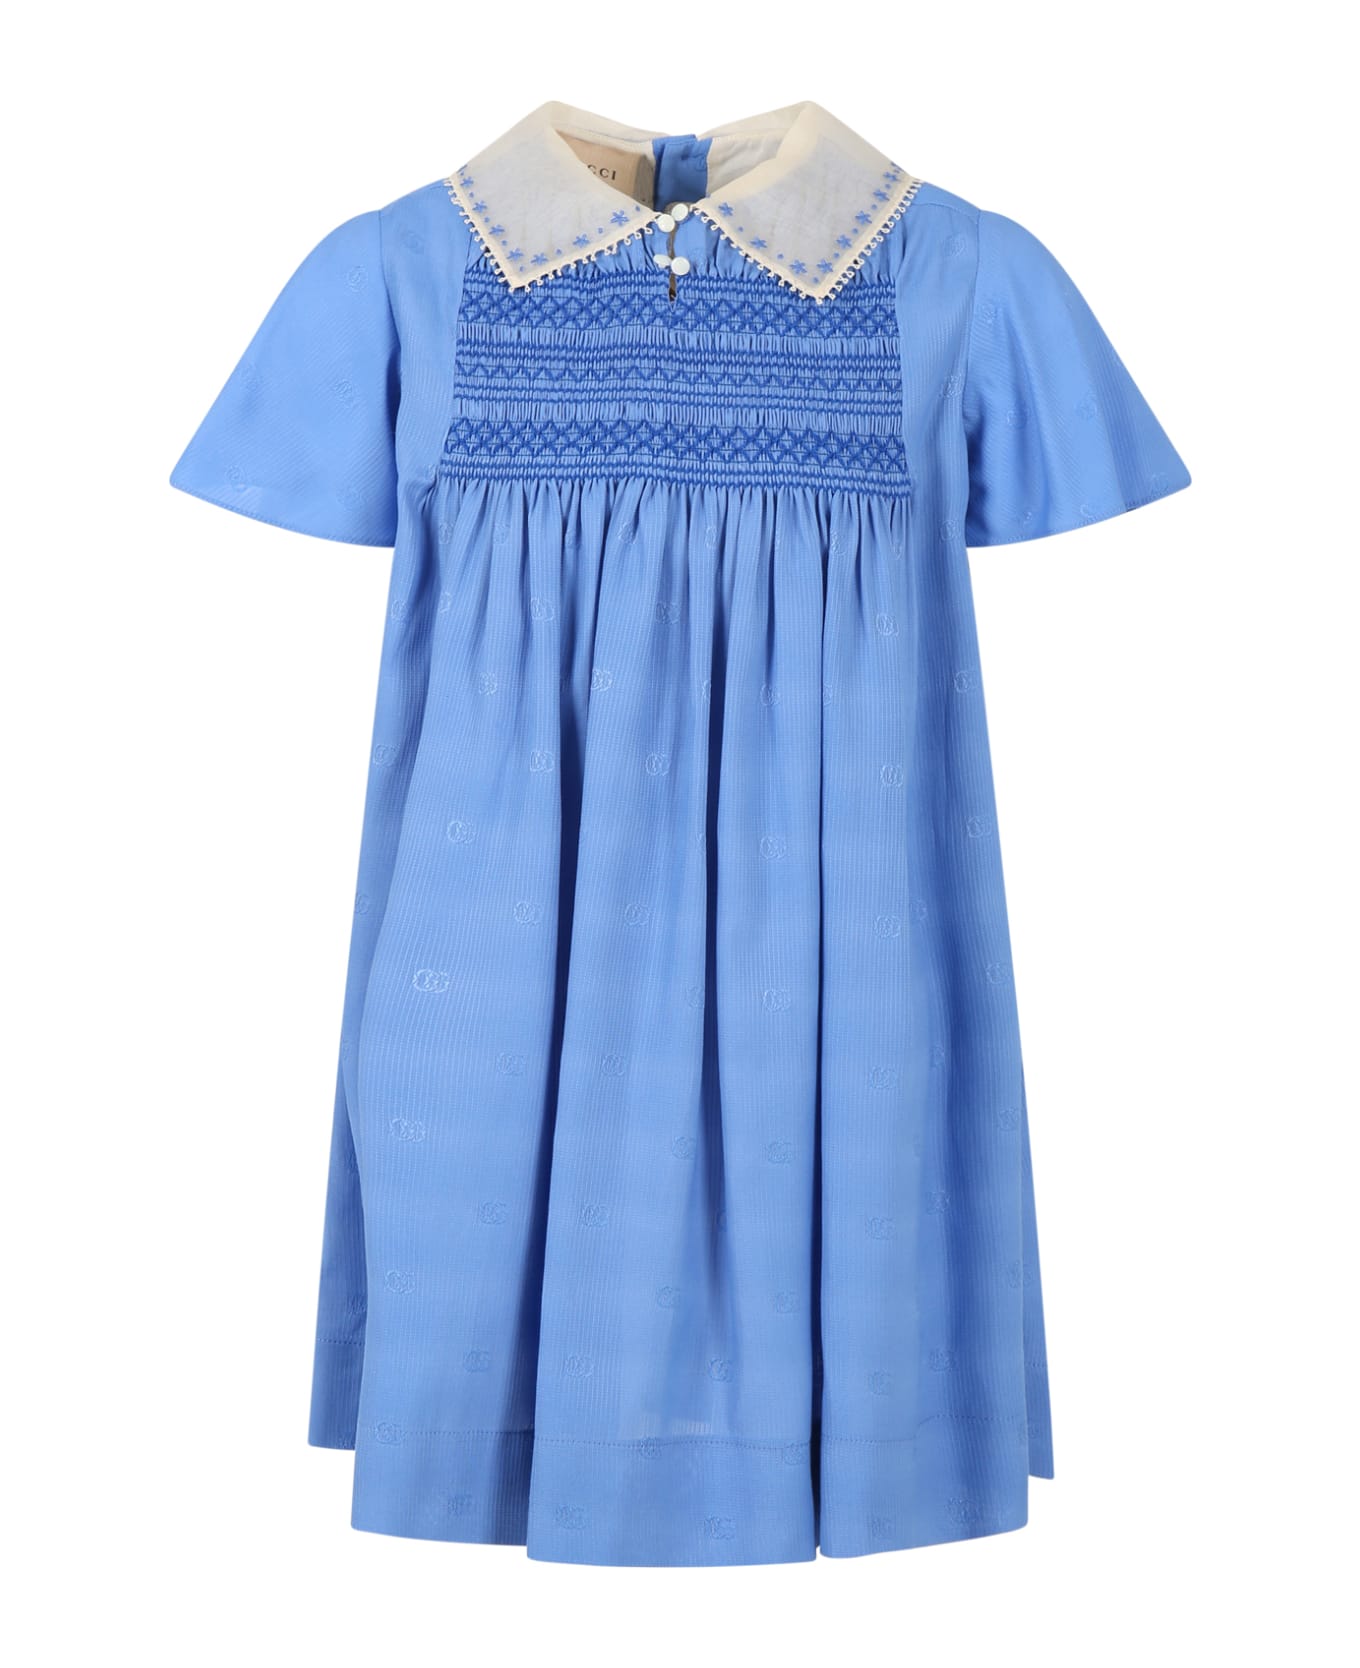 Gucci bague Light-blue Dress For Girl With Gg - Light Blue